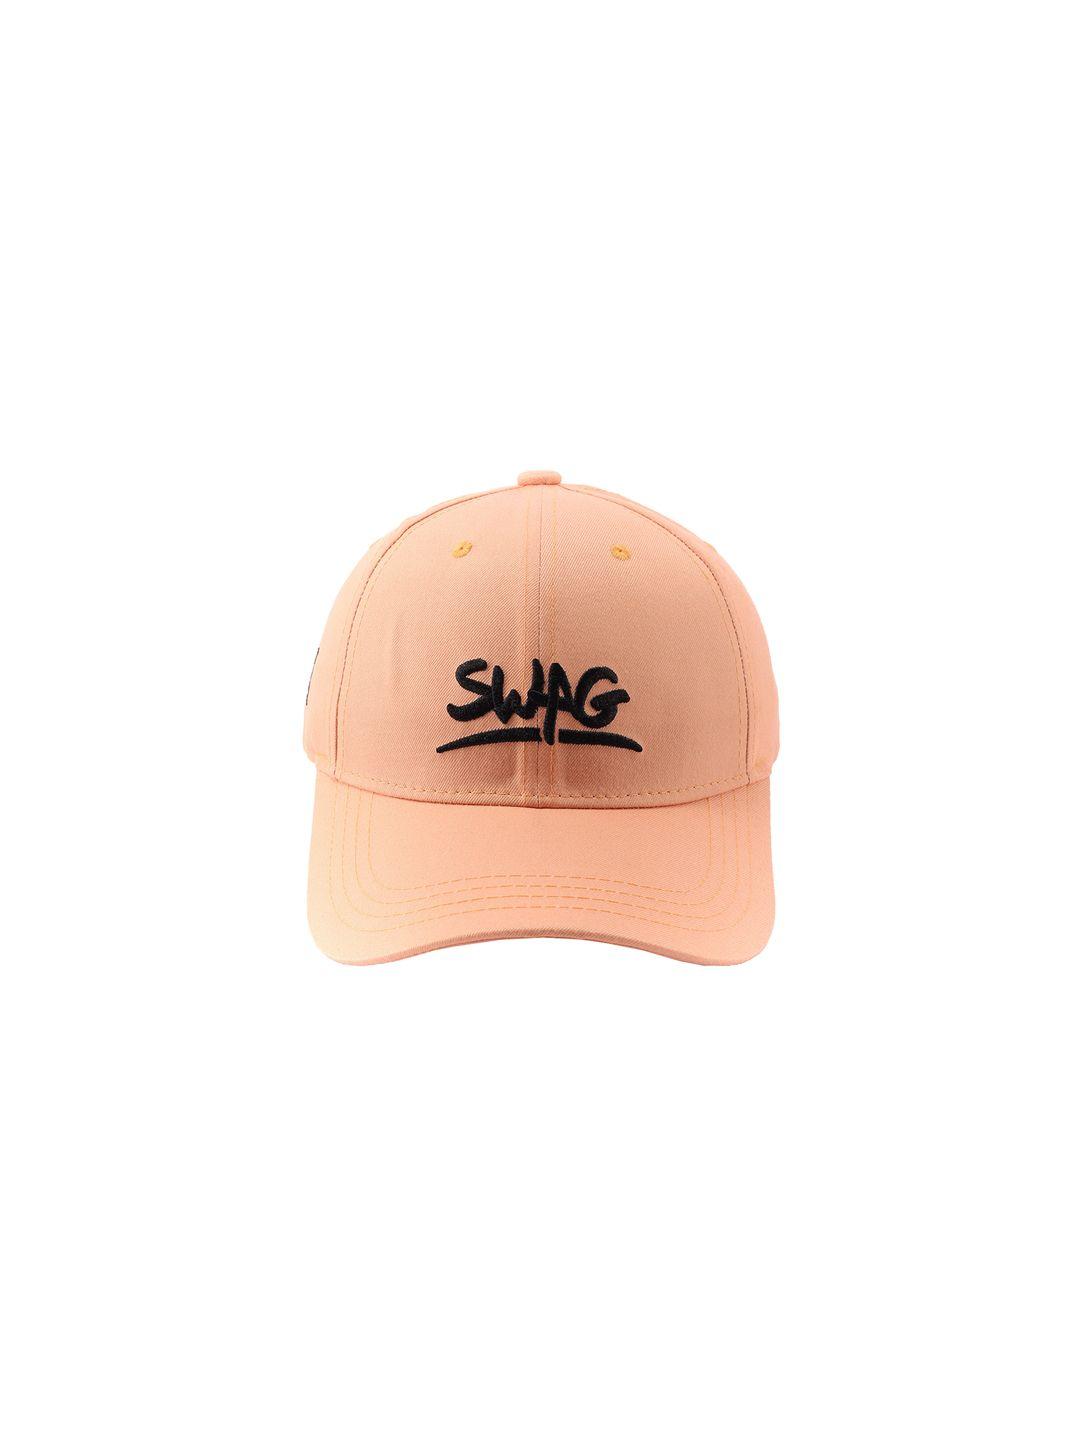 cap shap unisex orange embroidered baseball cap